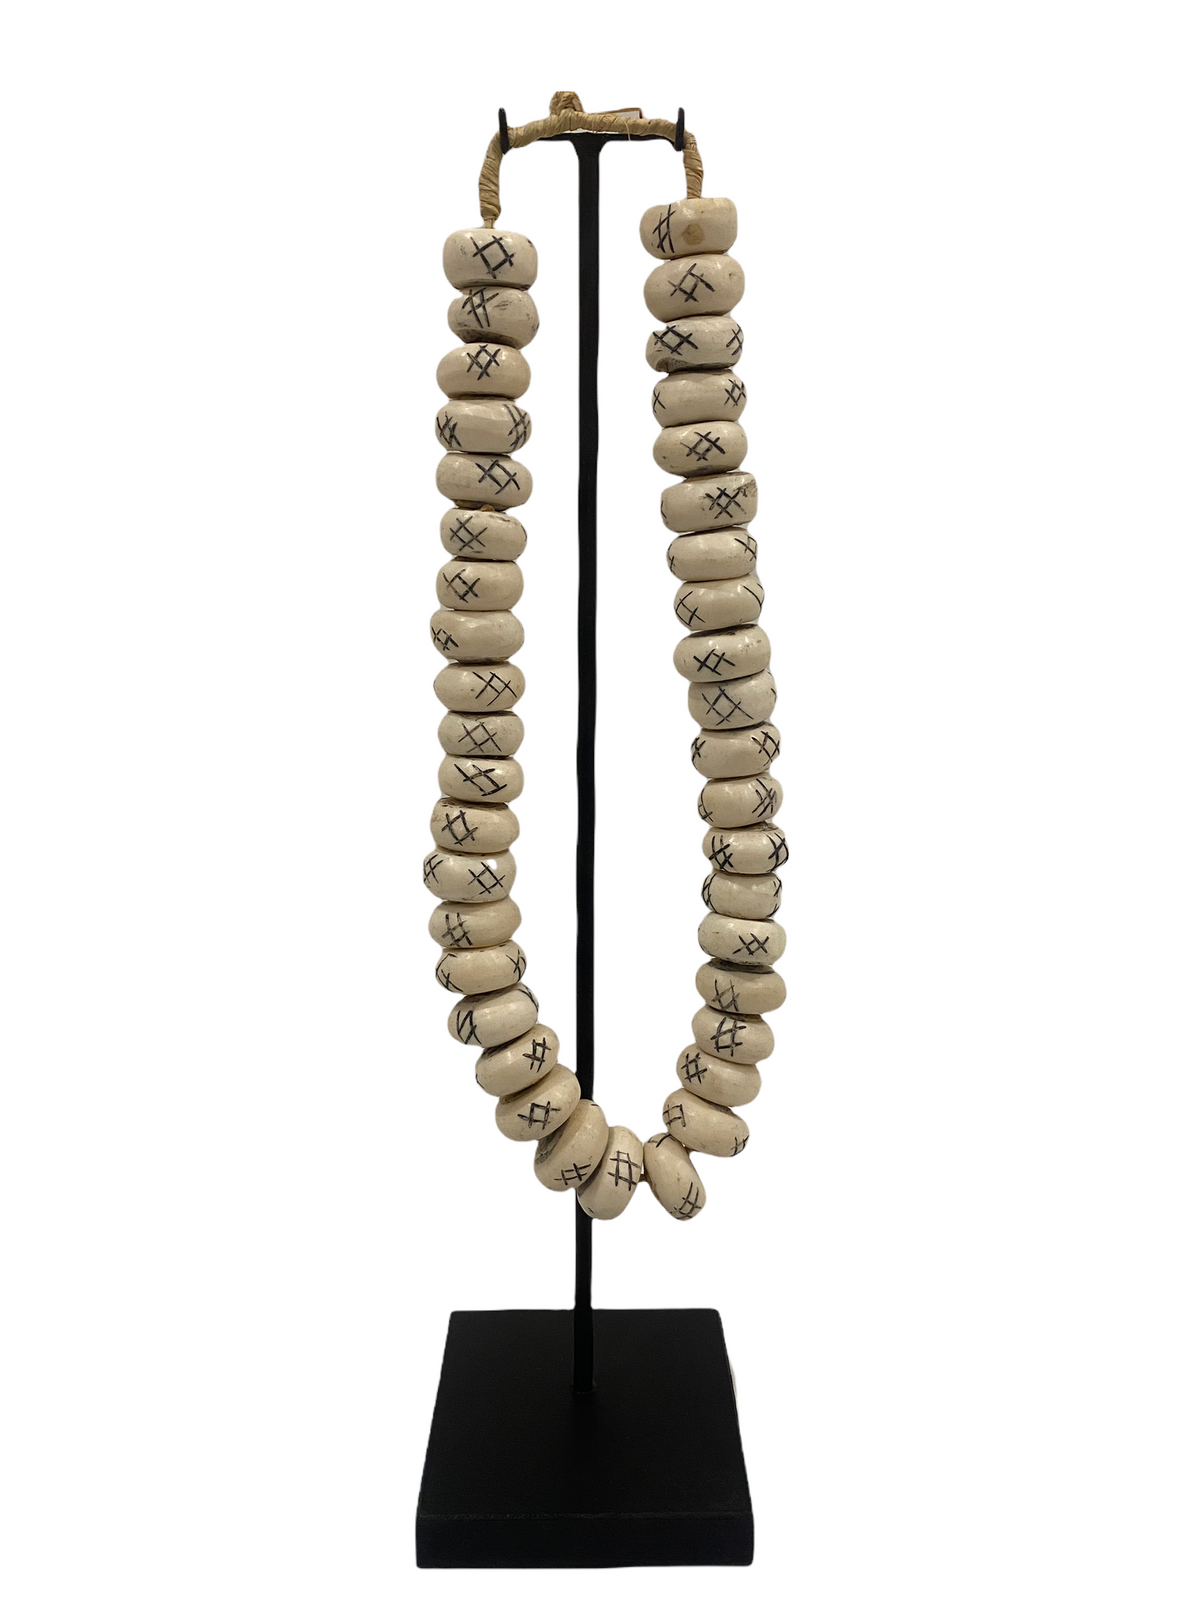 Kenya Beads Necklace - white beads necklace (47.5)